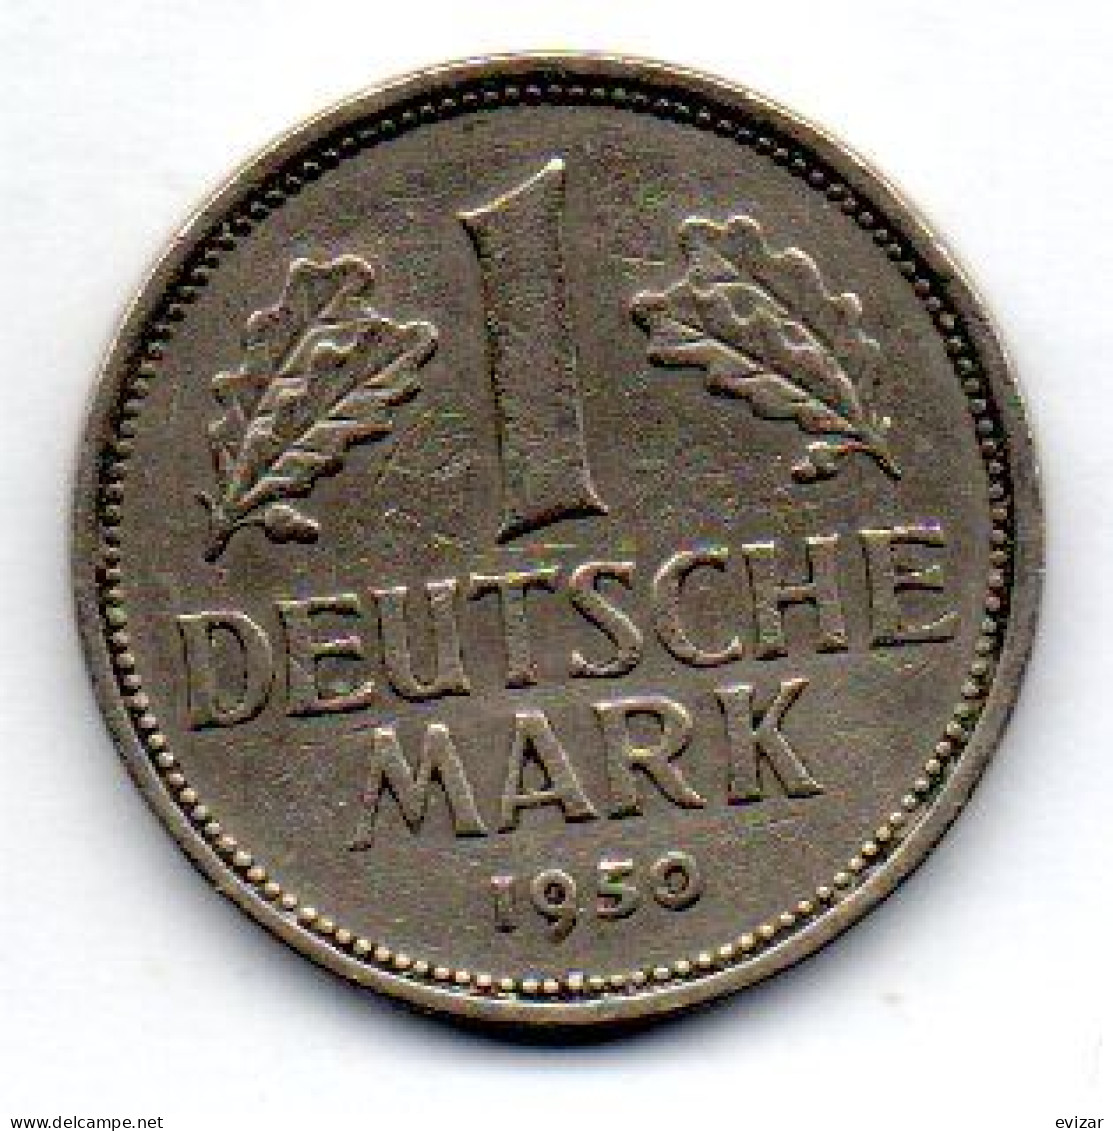 GERMANY - FEDERAL REPUBLIC, 1 Mark, Copper-Nickel, Year 1950-J, KM # 110 - 1 Marco